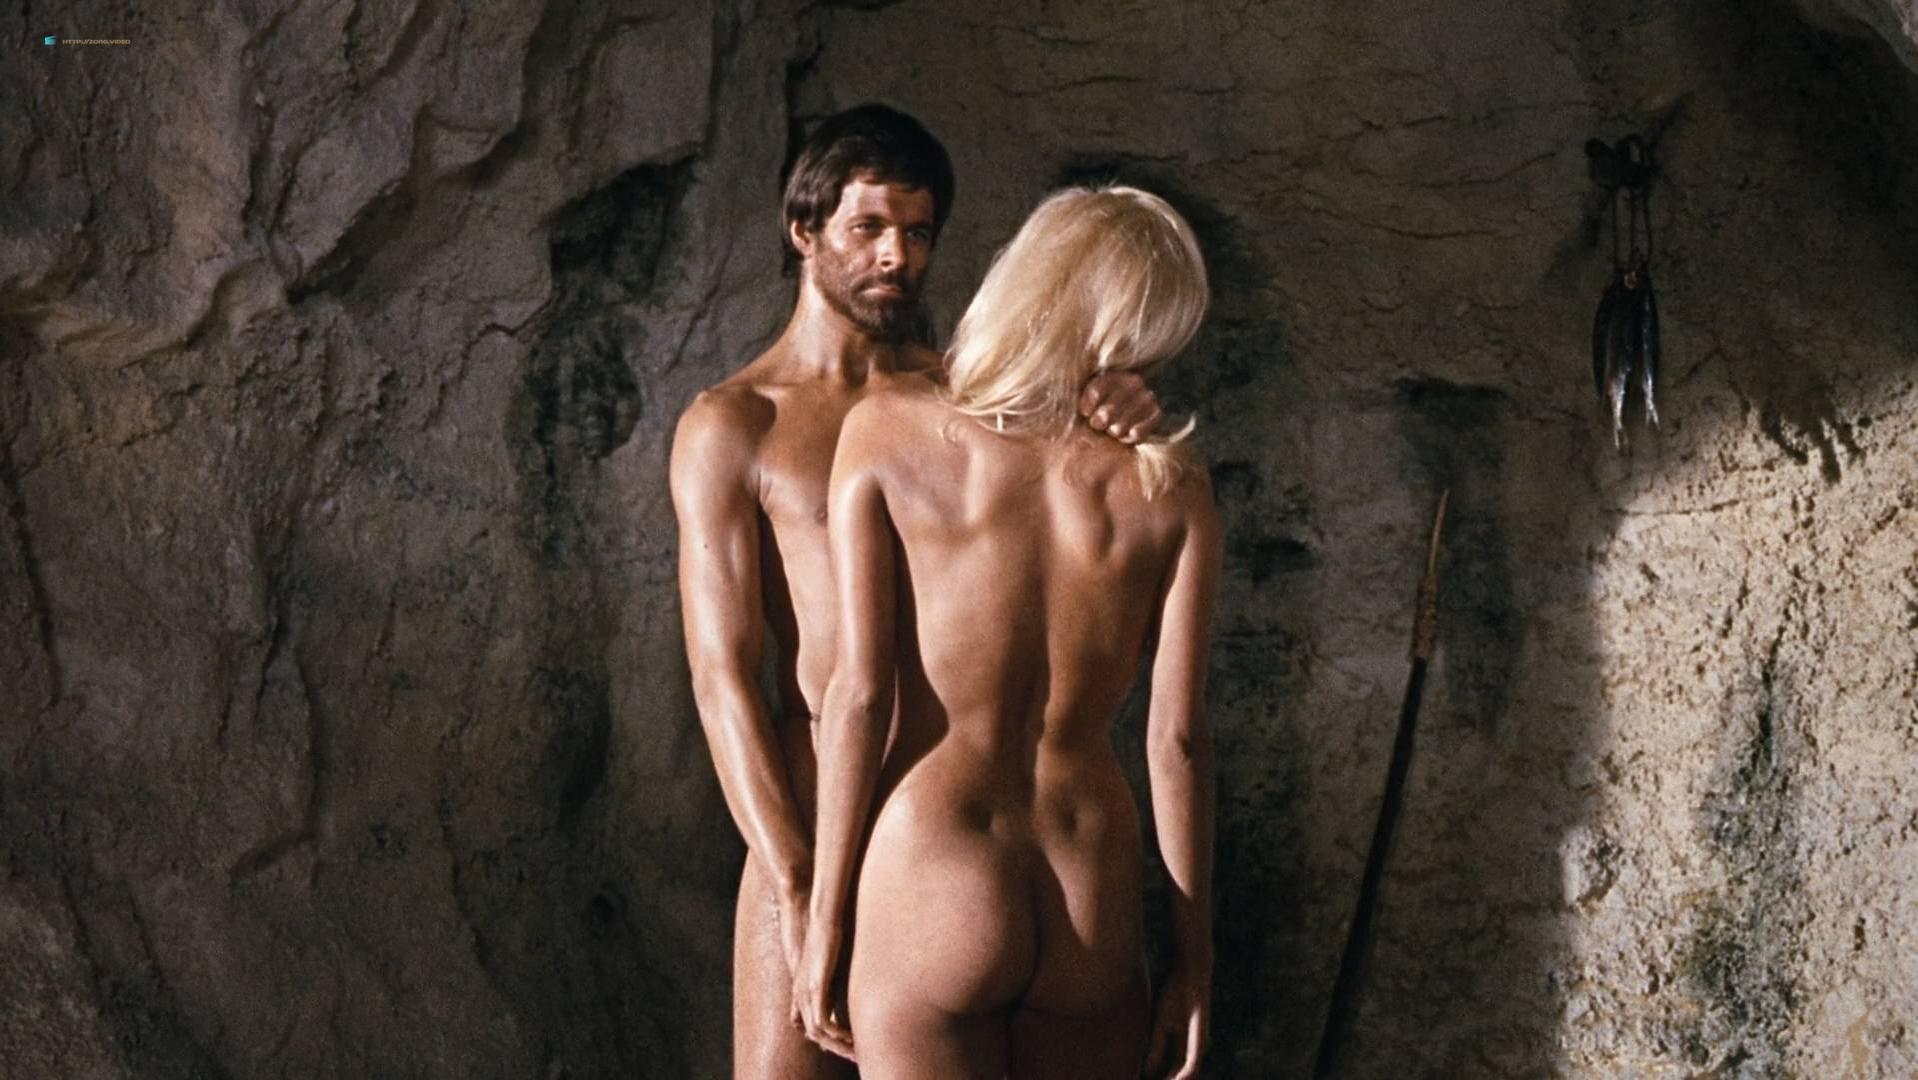 Imogene hassall nude sex scene